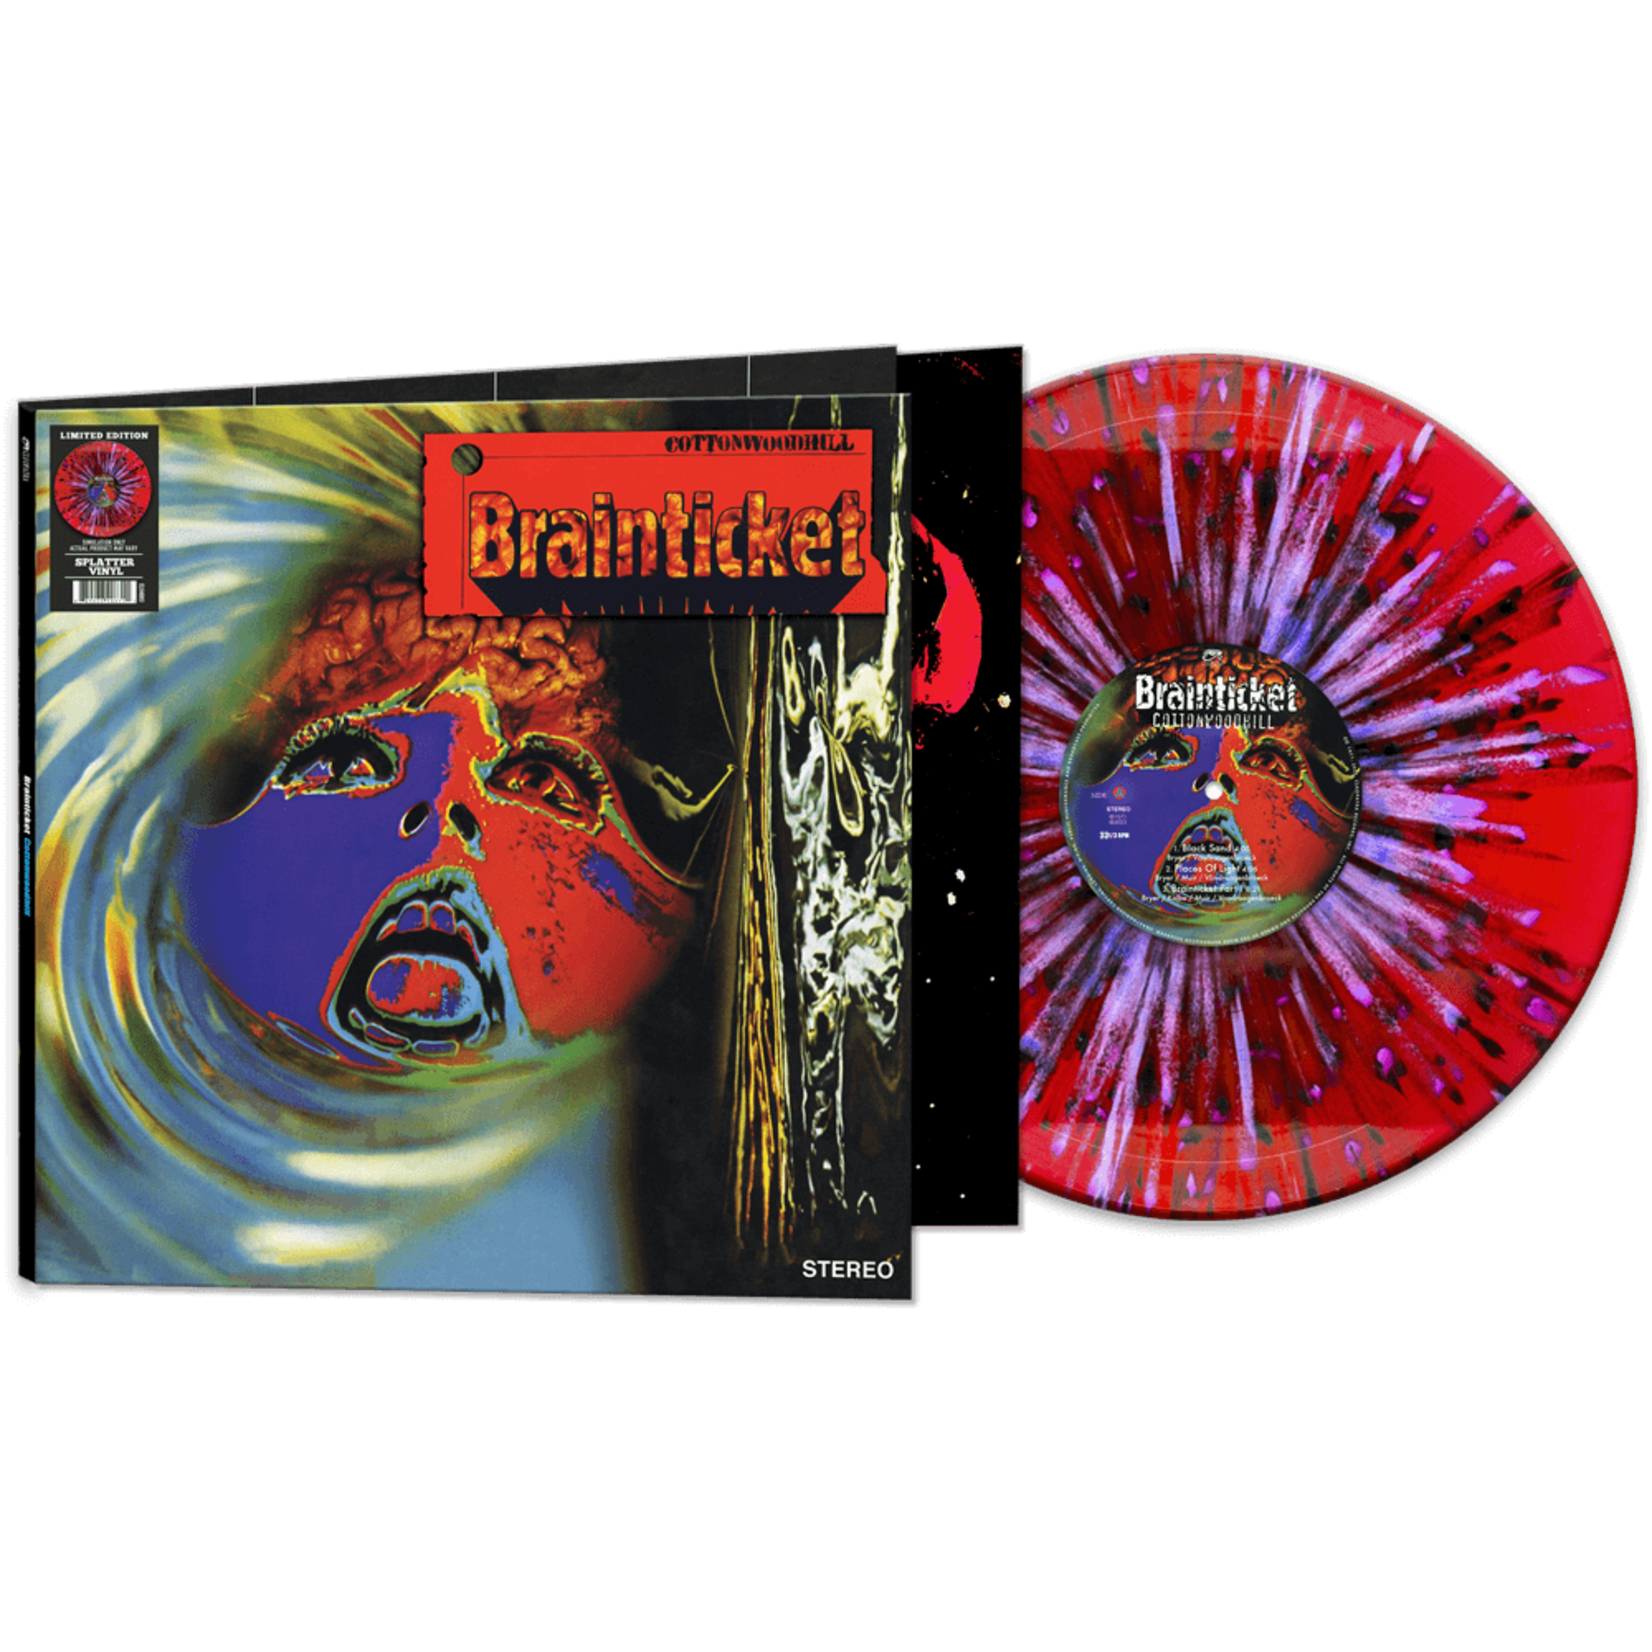 [New] Brainticket - Cottonwoodhill (red vinyl with purple & black splatter)